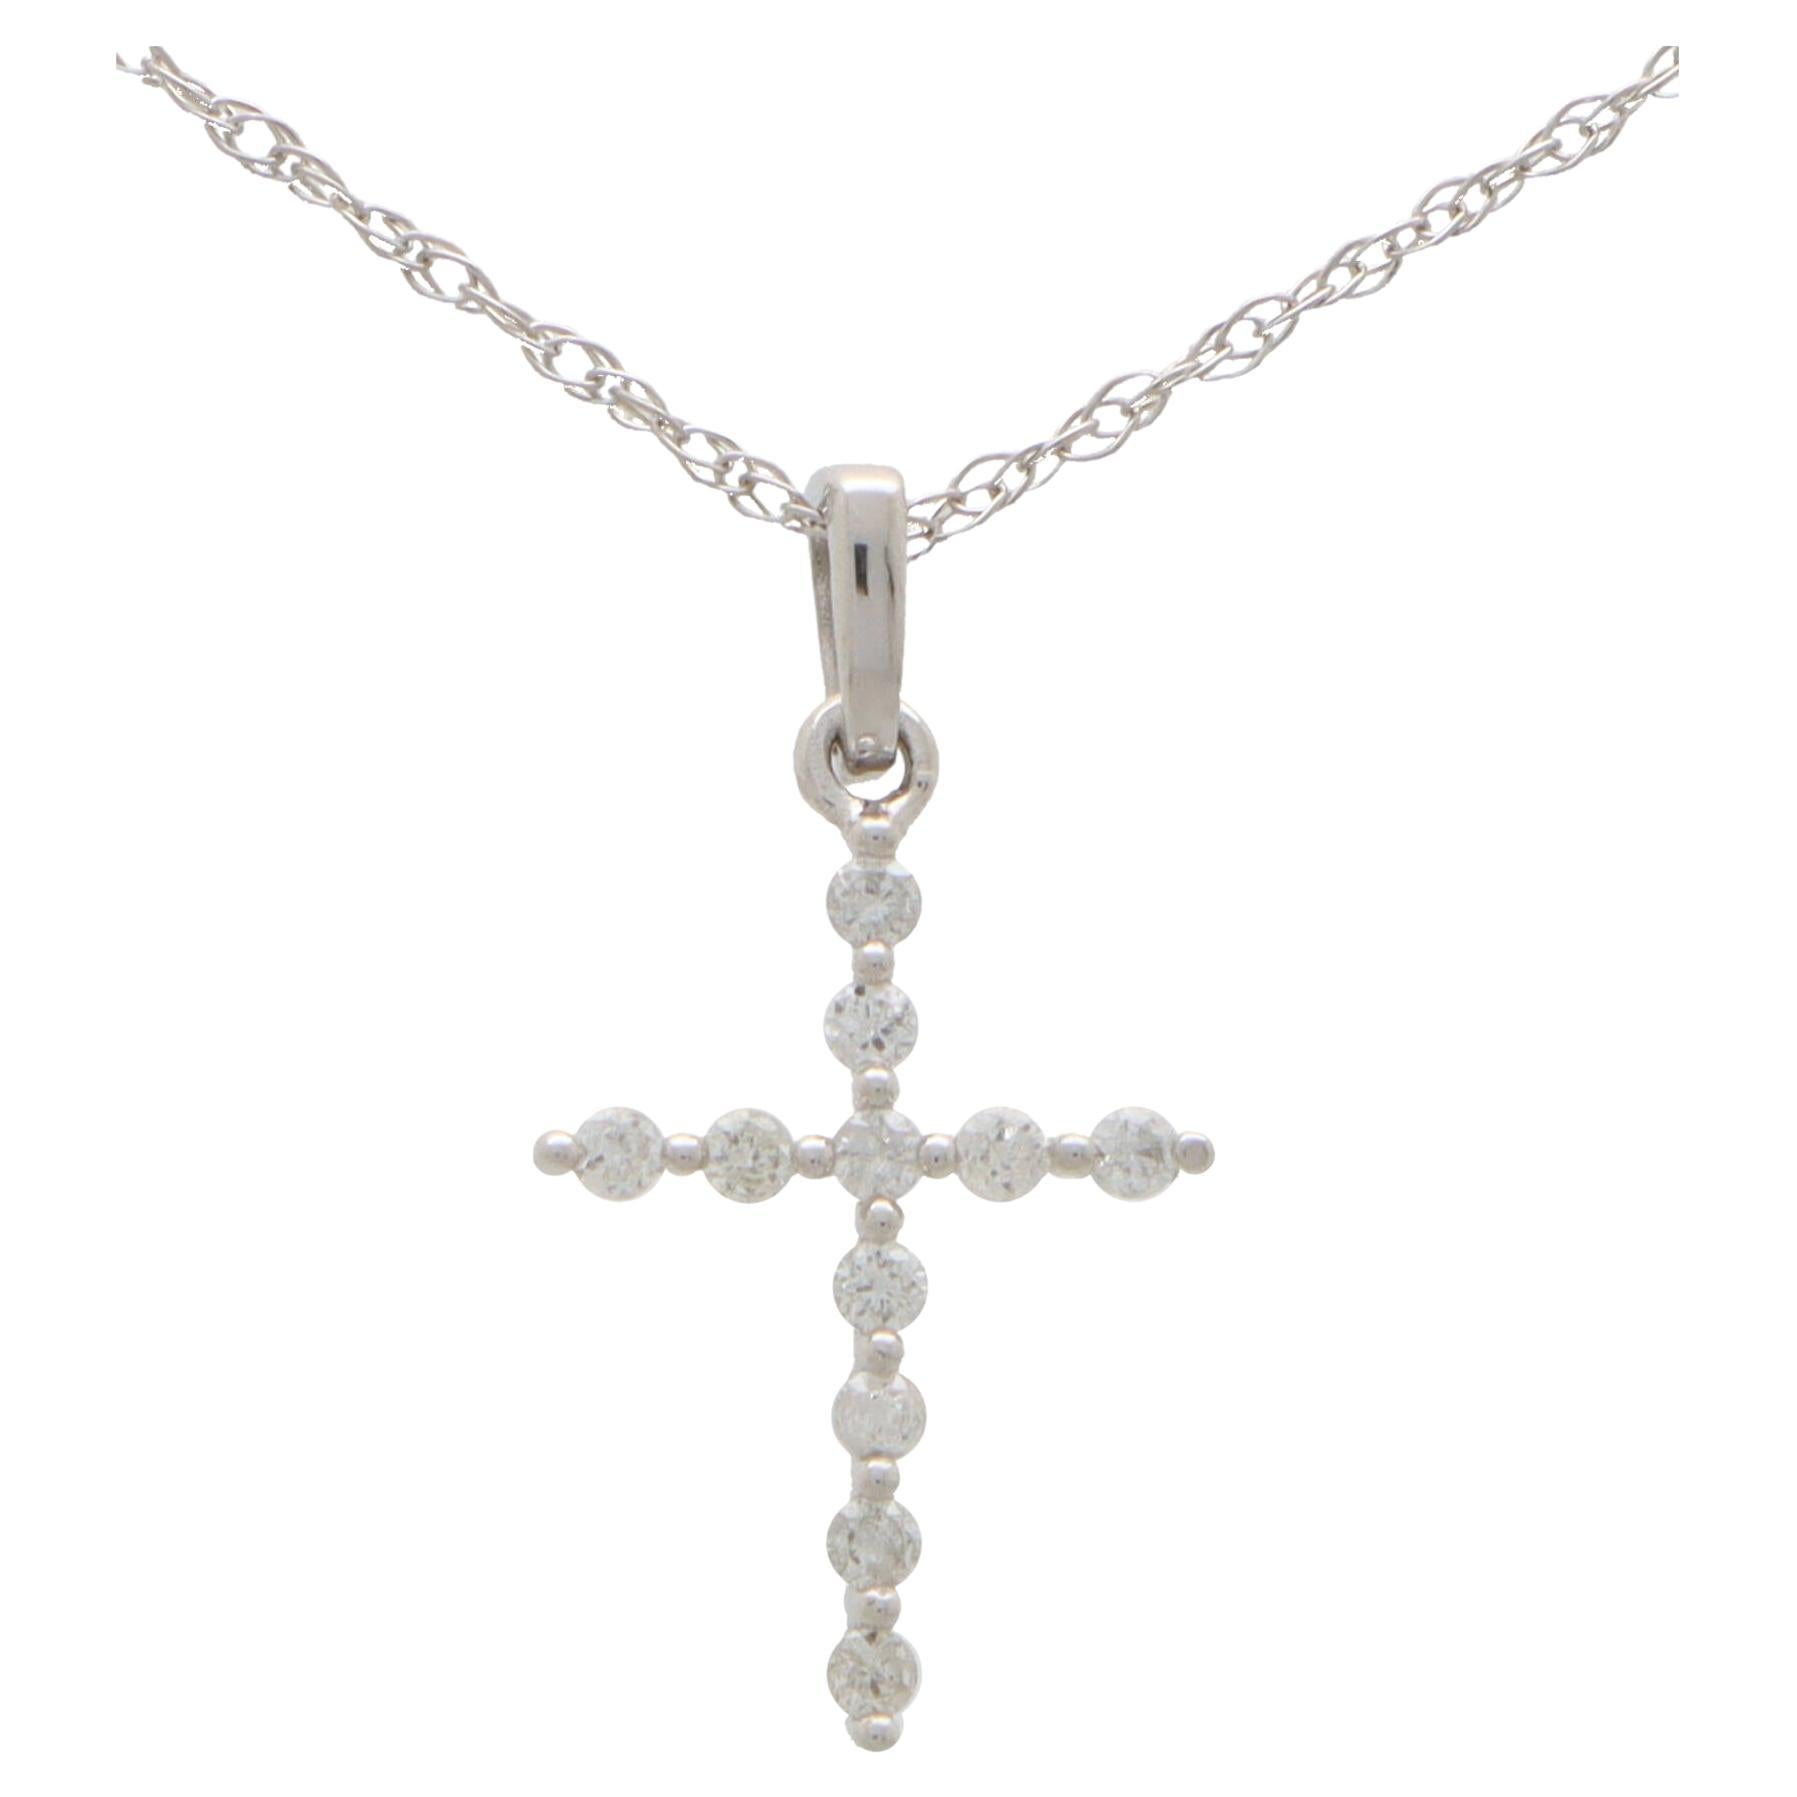 Contemporary Diamond Cross Pendant Necklace in 14k White Gold